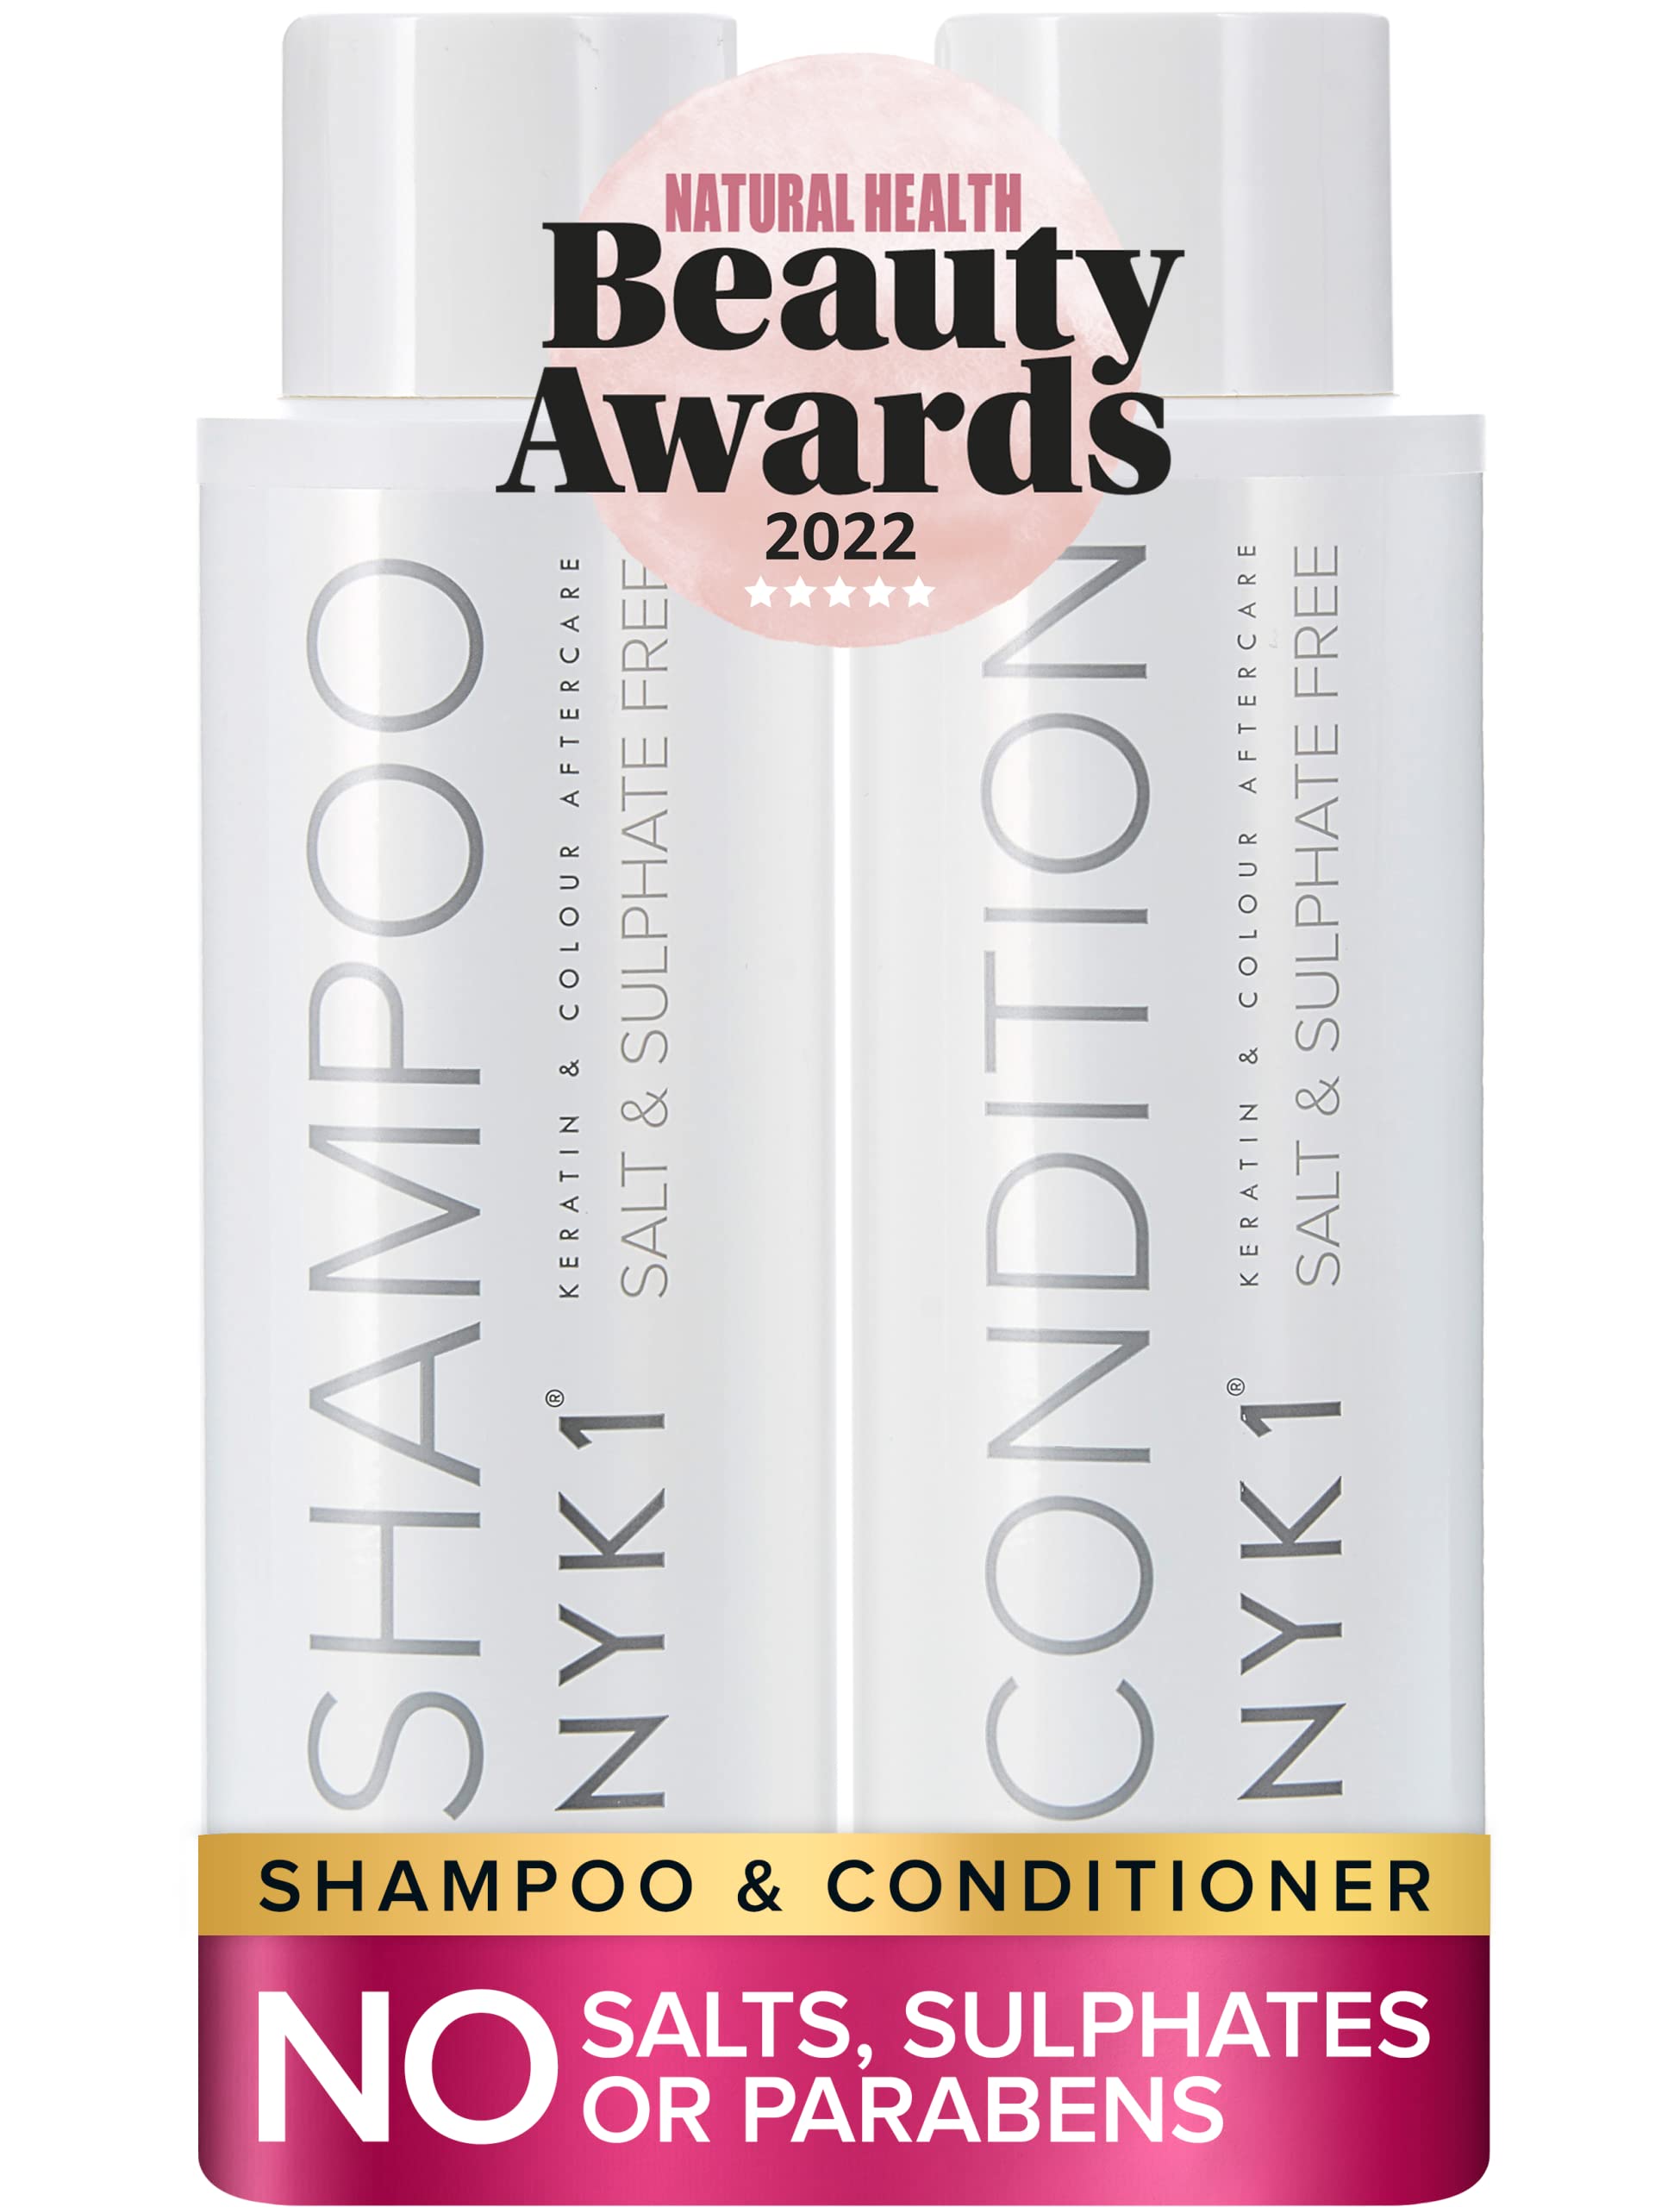 NYK1 Shampoo and Conditioner Set